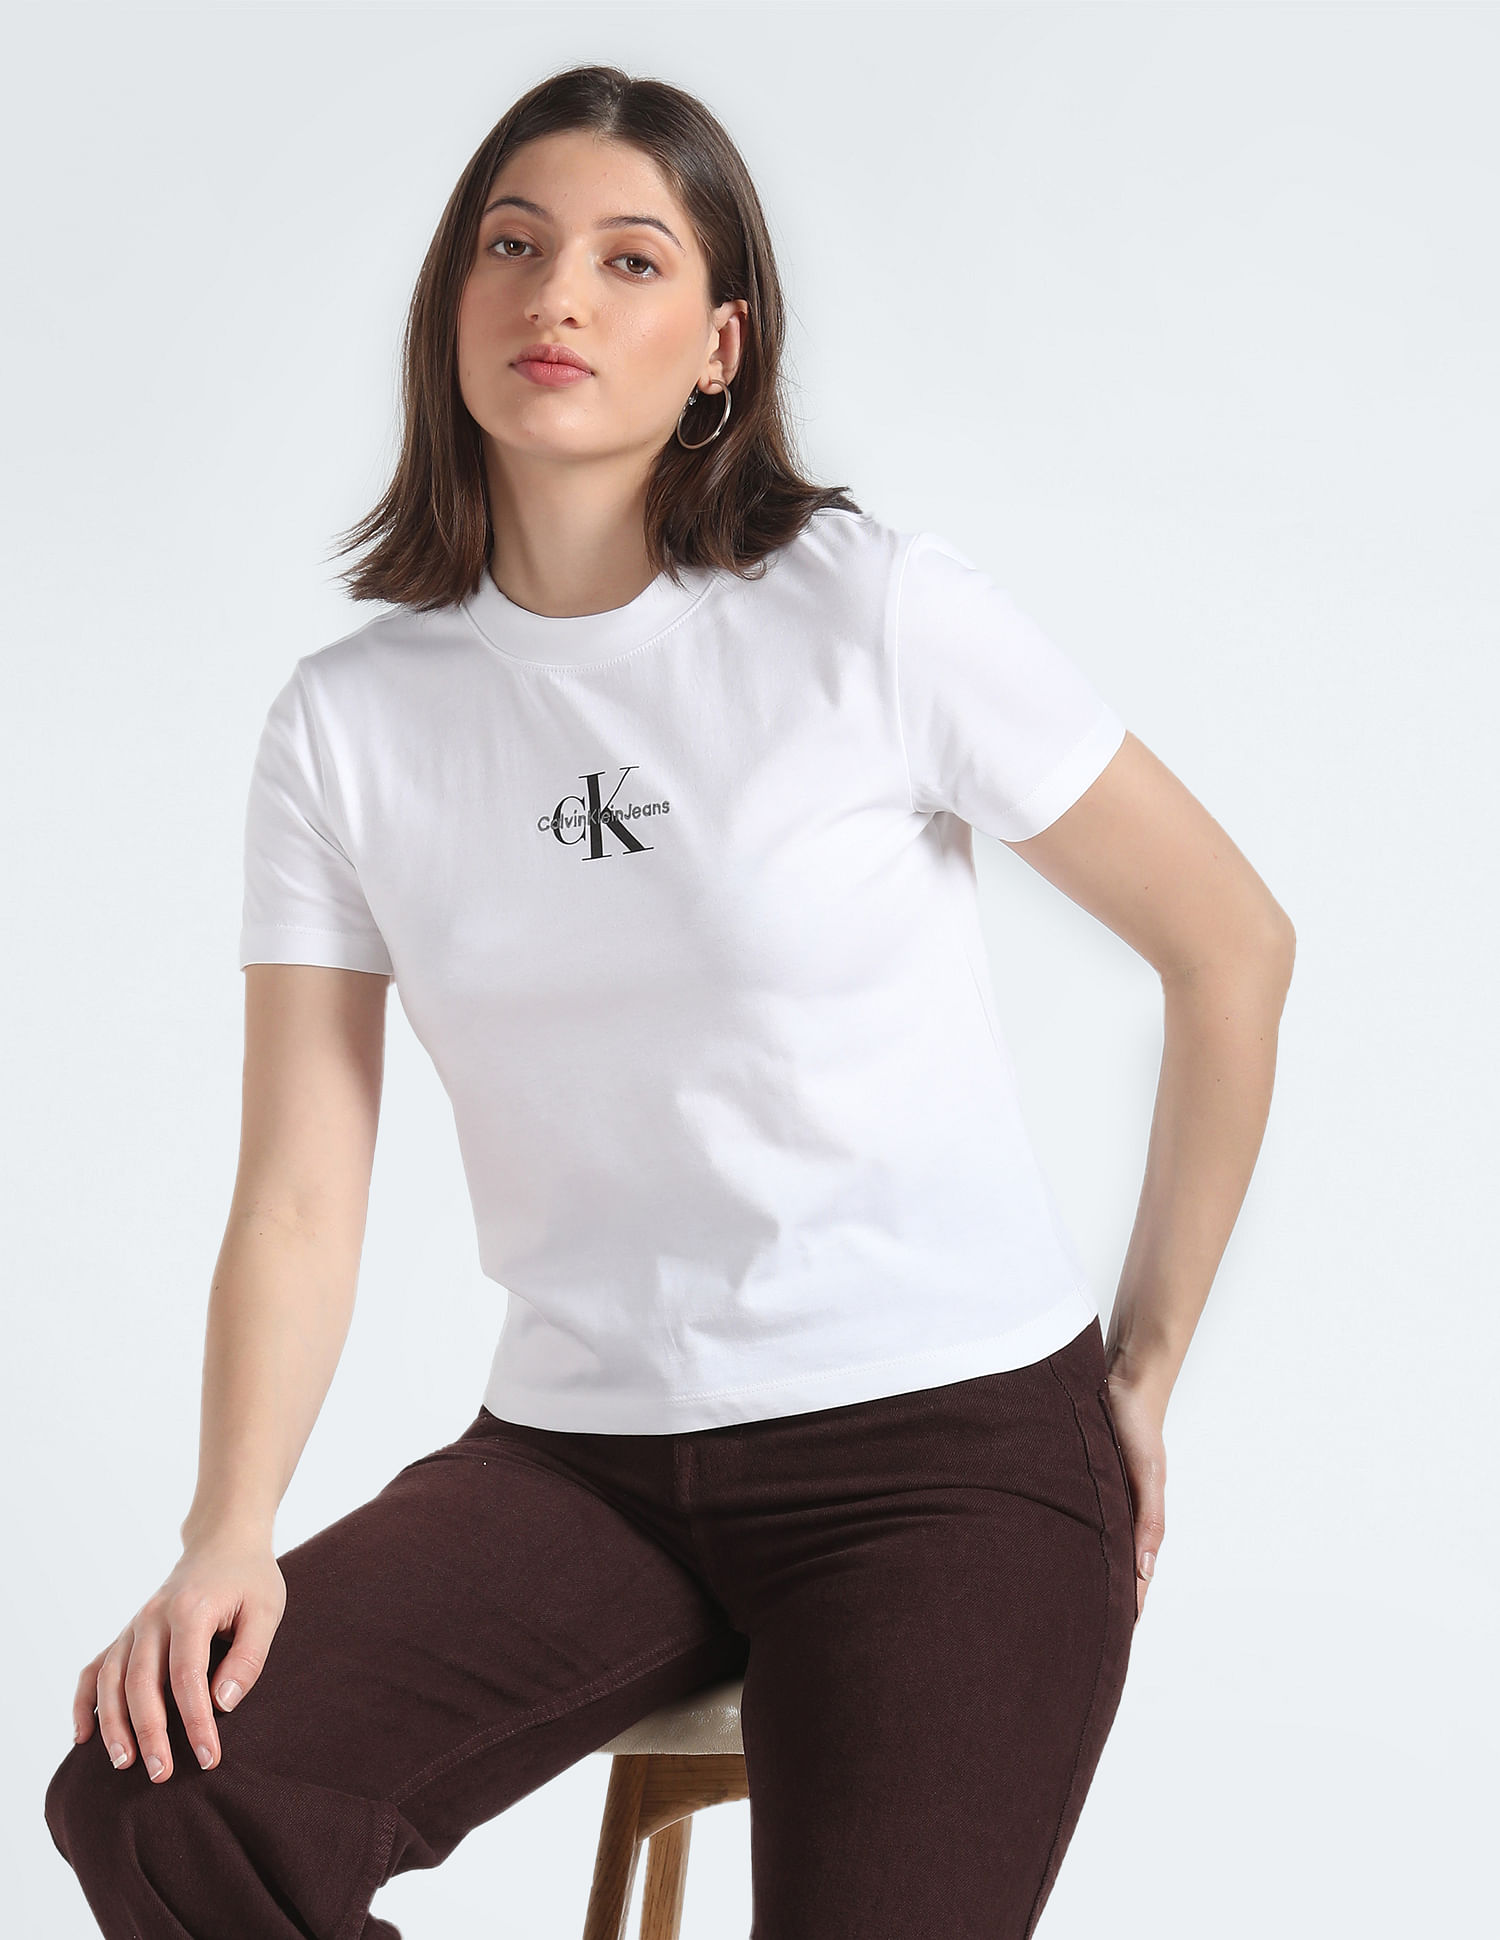 Transitional Monogram Jeans Calvin Klein T-Shirt Buy Cotton Baby